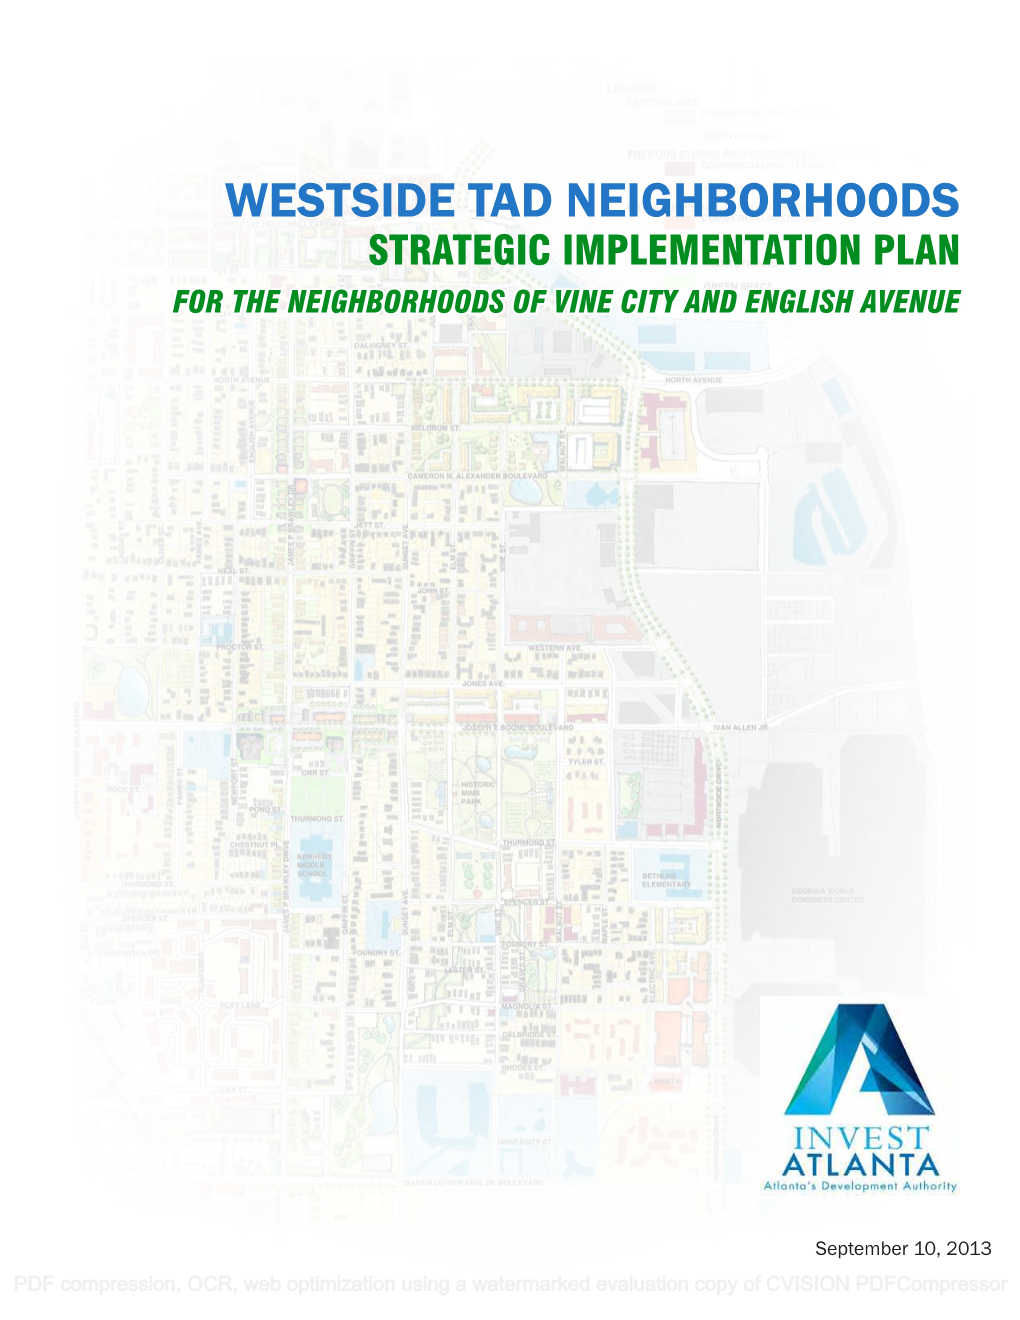 WESTSIDE TAD NEIGHBORHOODS Strategic Implementation Plan for the Neighborhoods of Vine City and English Avenue